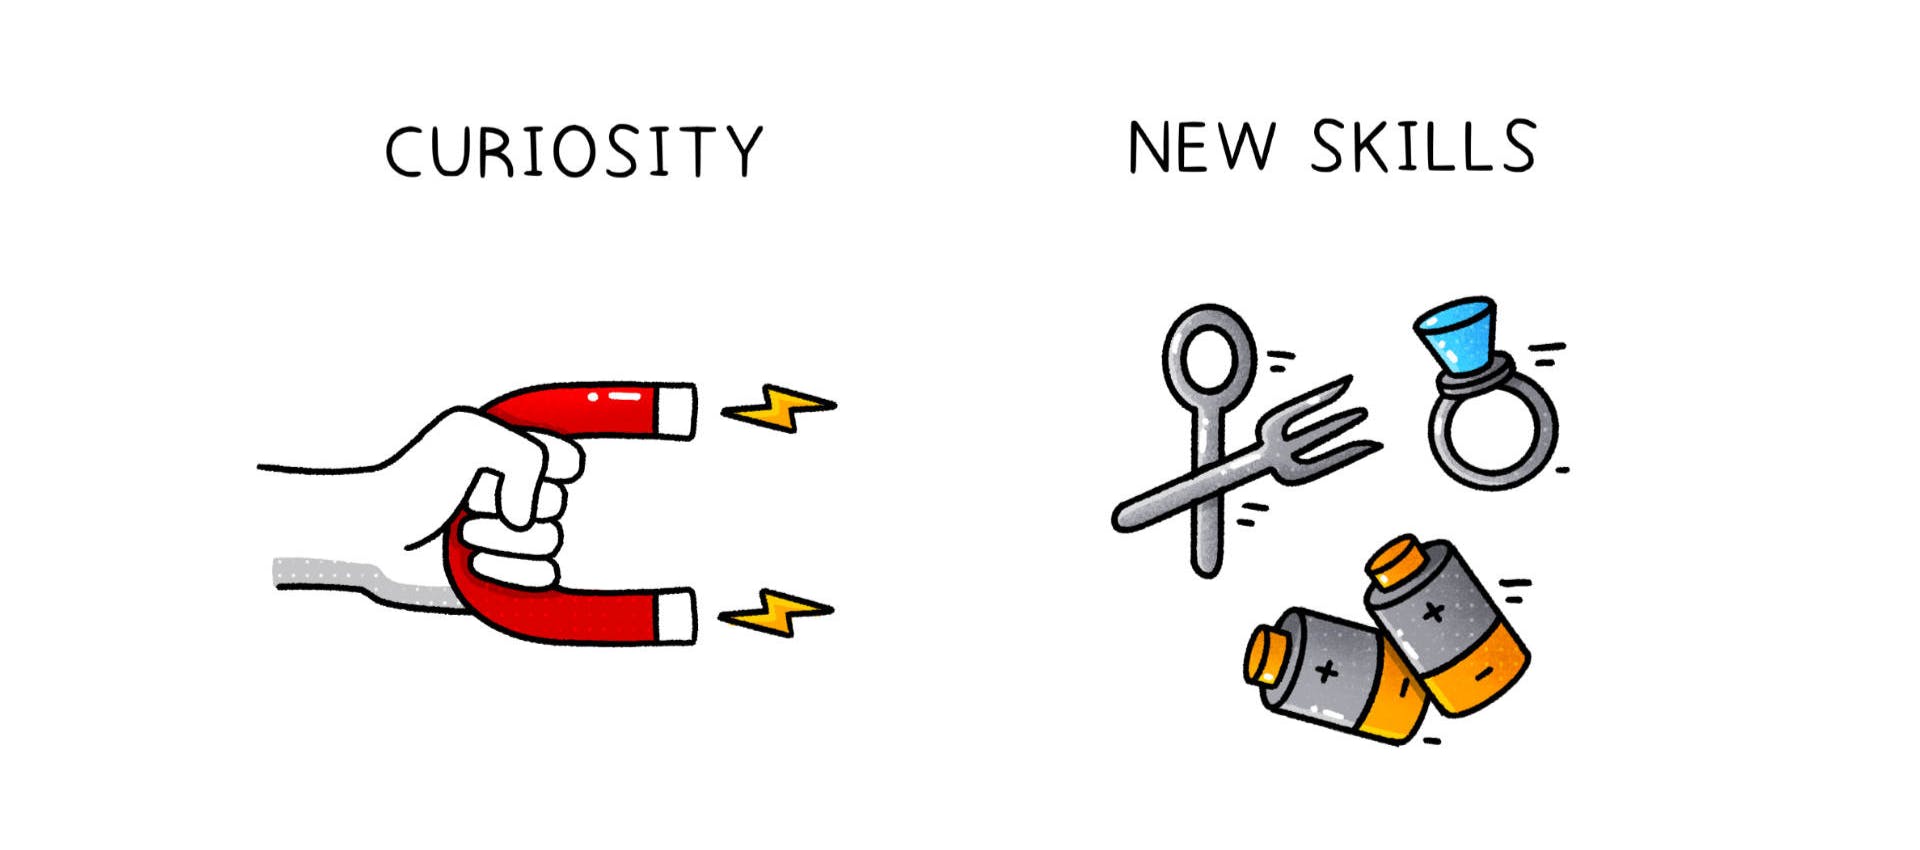 Curiosity sparks new skills, with illustration